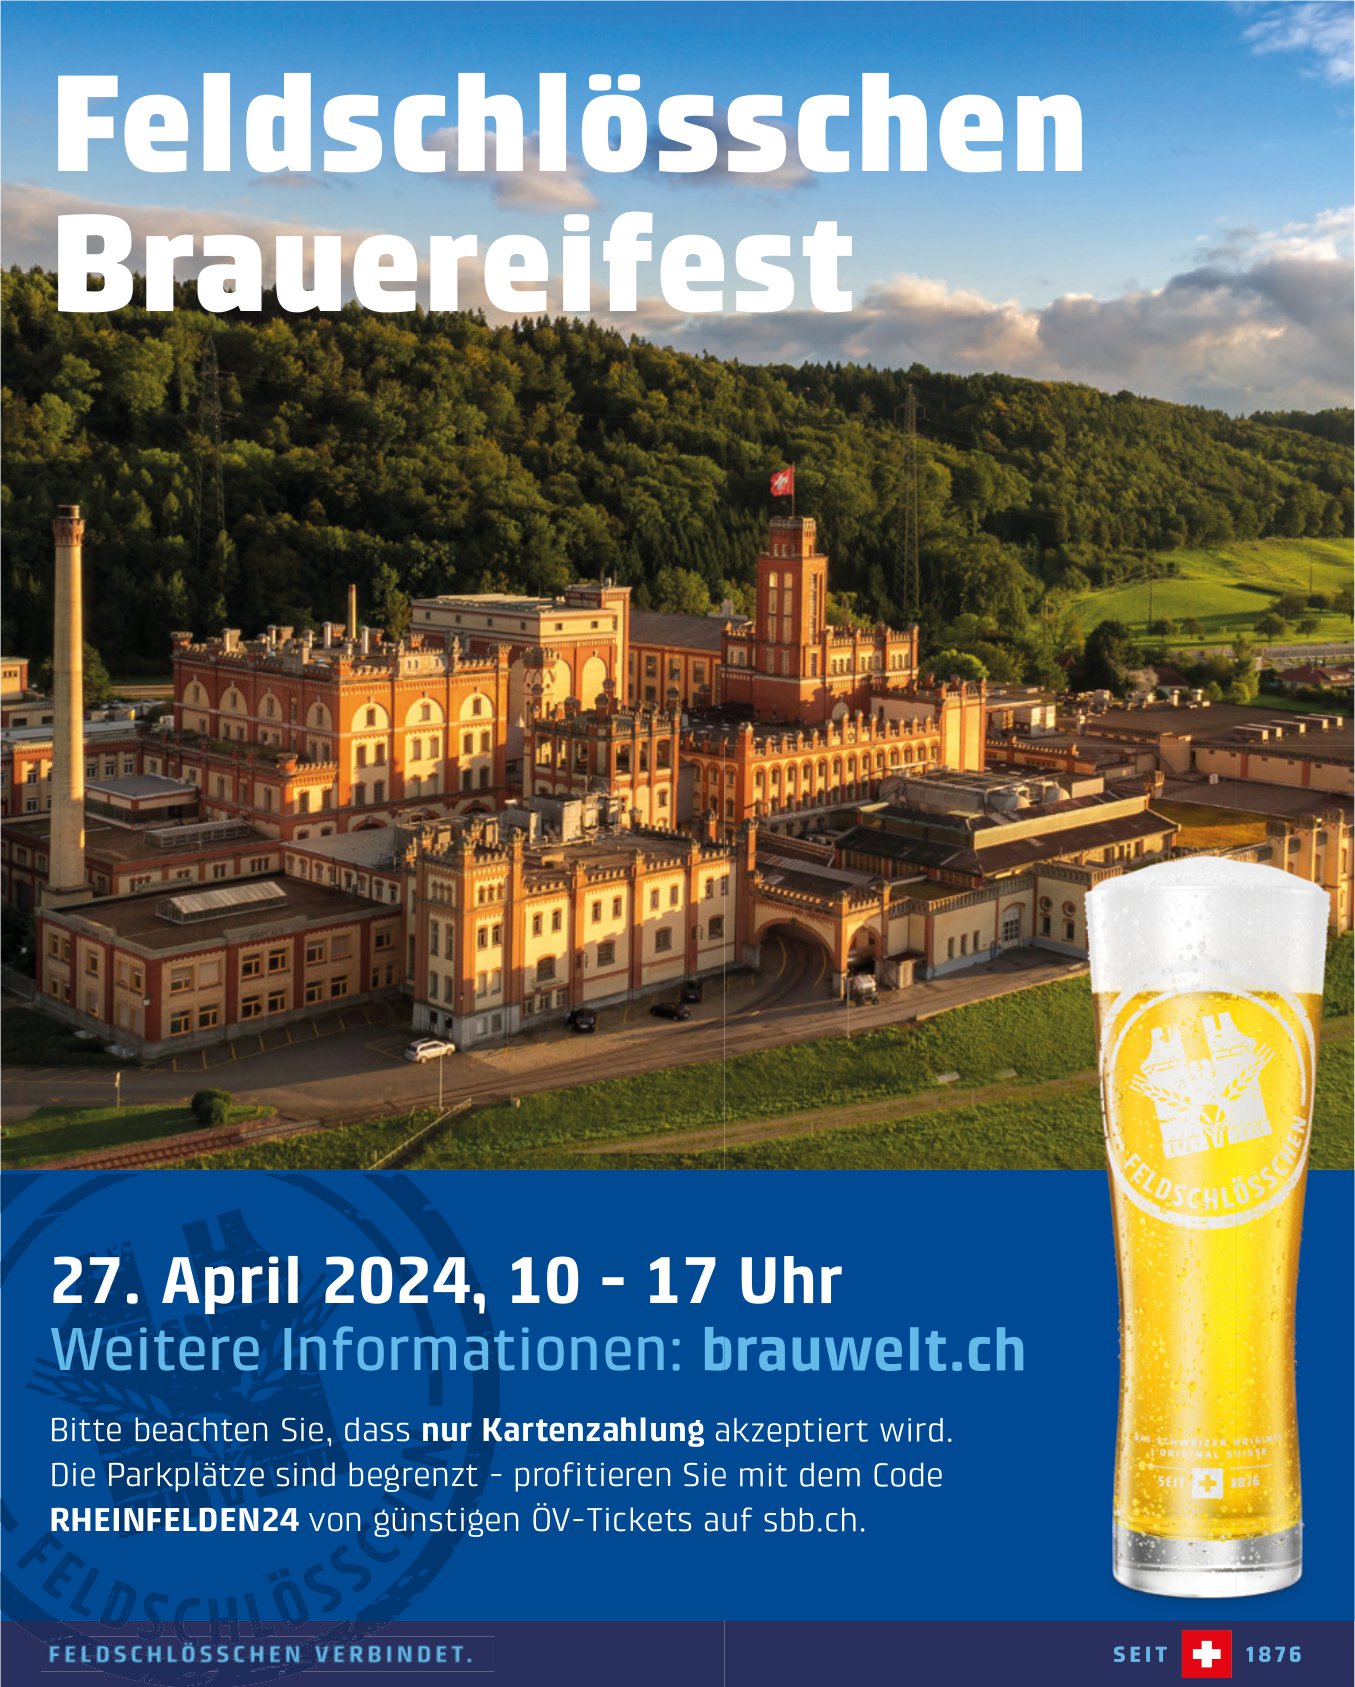 Feldschlösschen Brauereifest, 27. April, Feldschlösschen Brauwelt, Rheinfelden